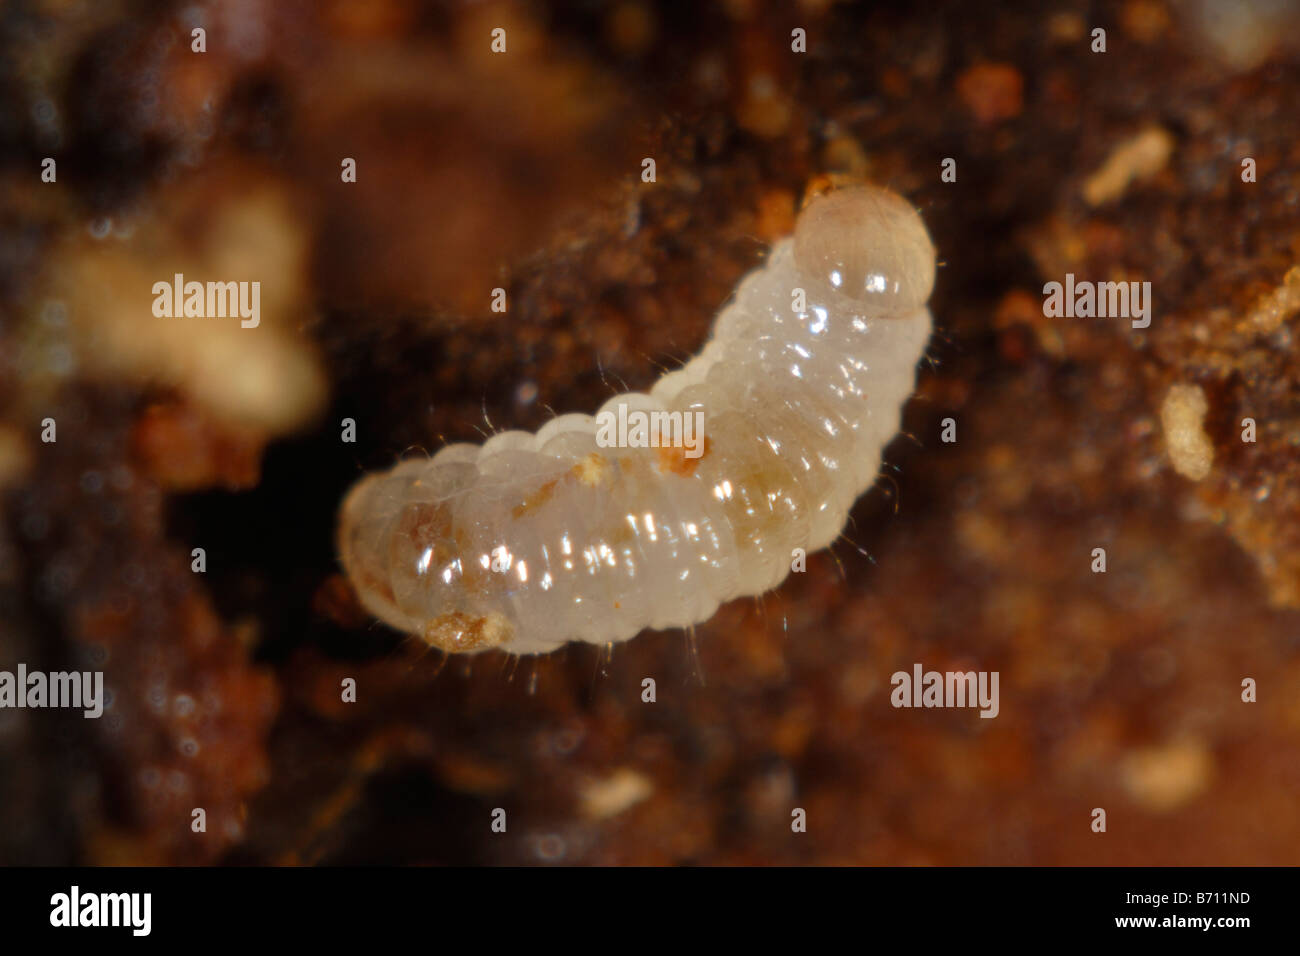 Bark beetle Xyleborus sp a wood boring beetle larva in damaged ornamental tree Stock Photo